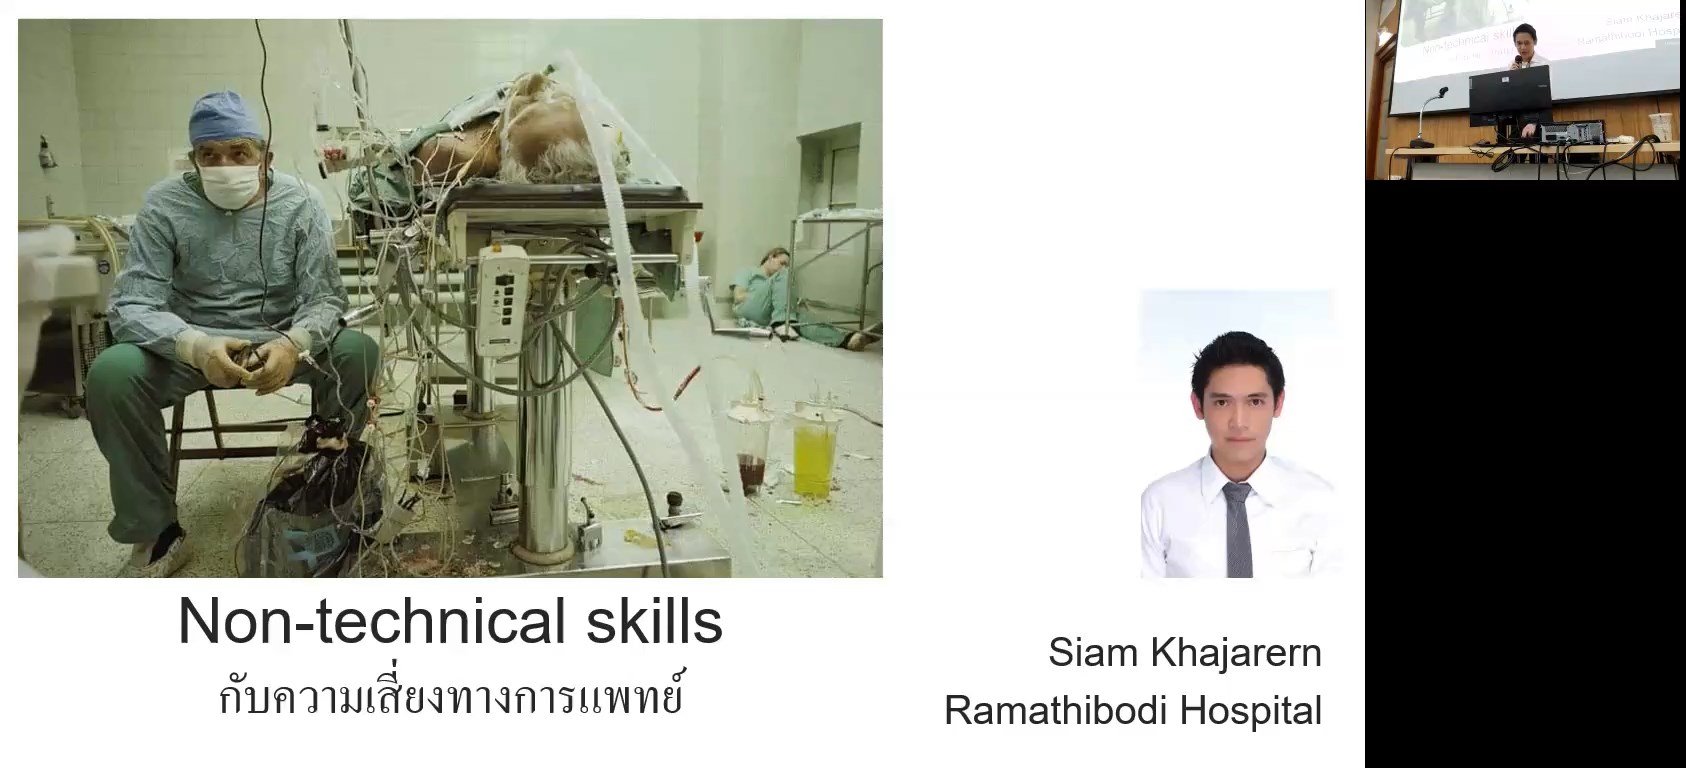 Non-technical skills กับความเสี่ยงทางการแพทย์: อ.สยาม ค้าเจริญ (14/02/67)